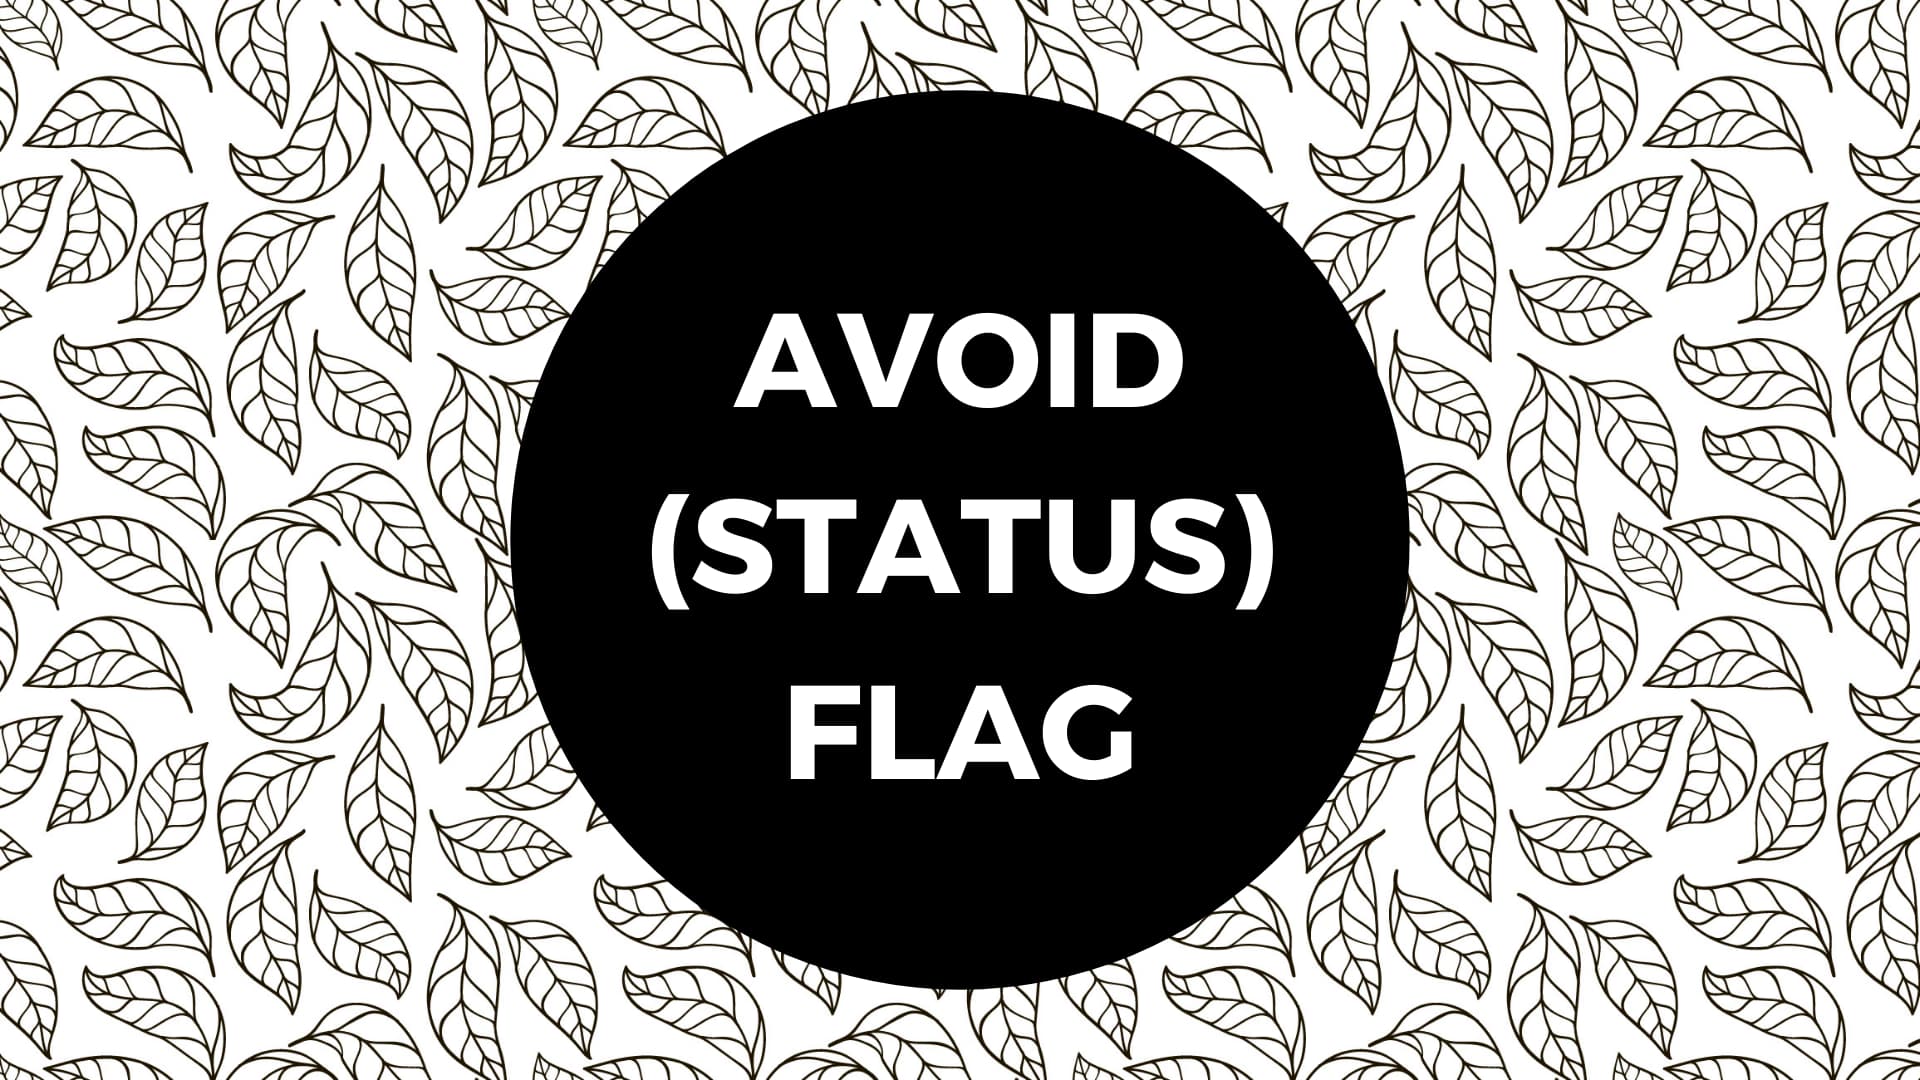 Avoid status flag